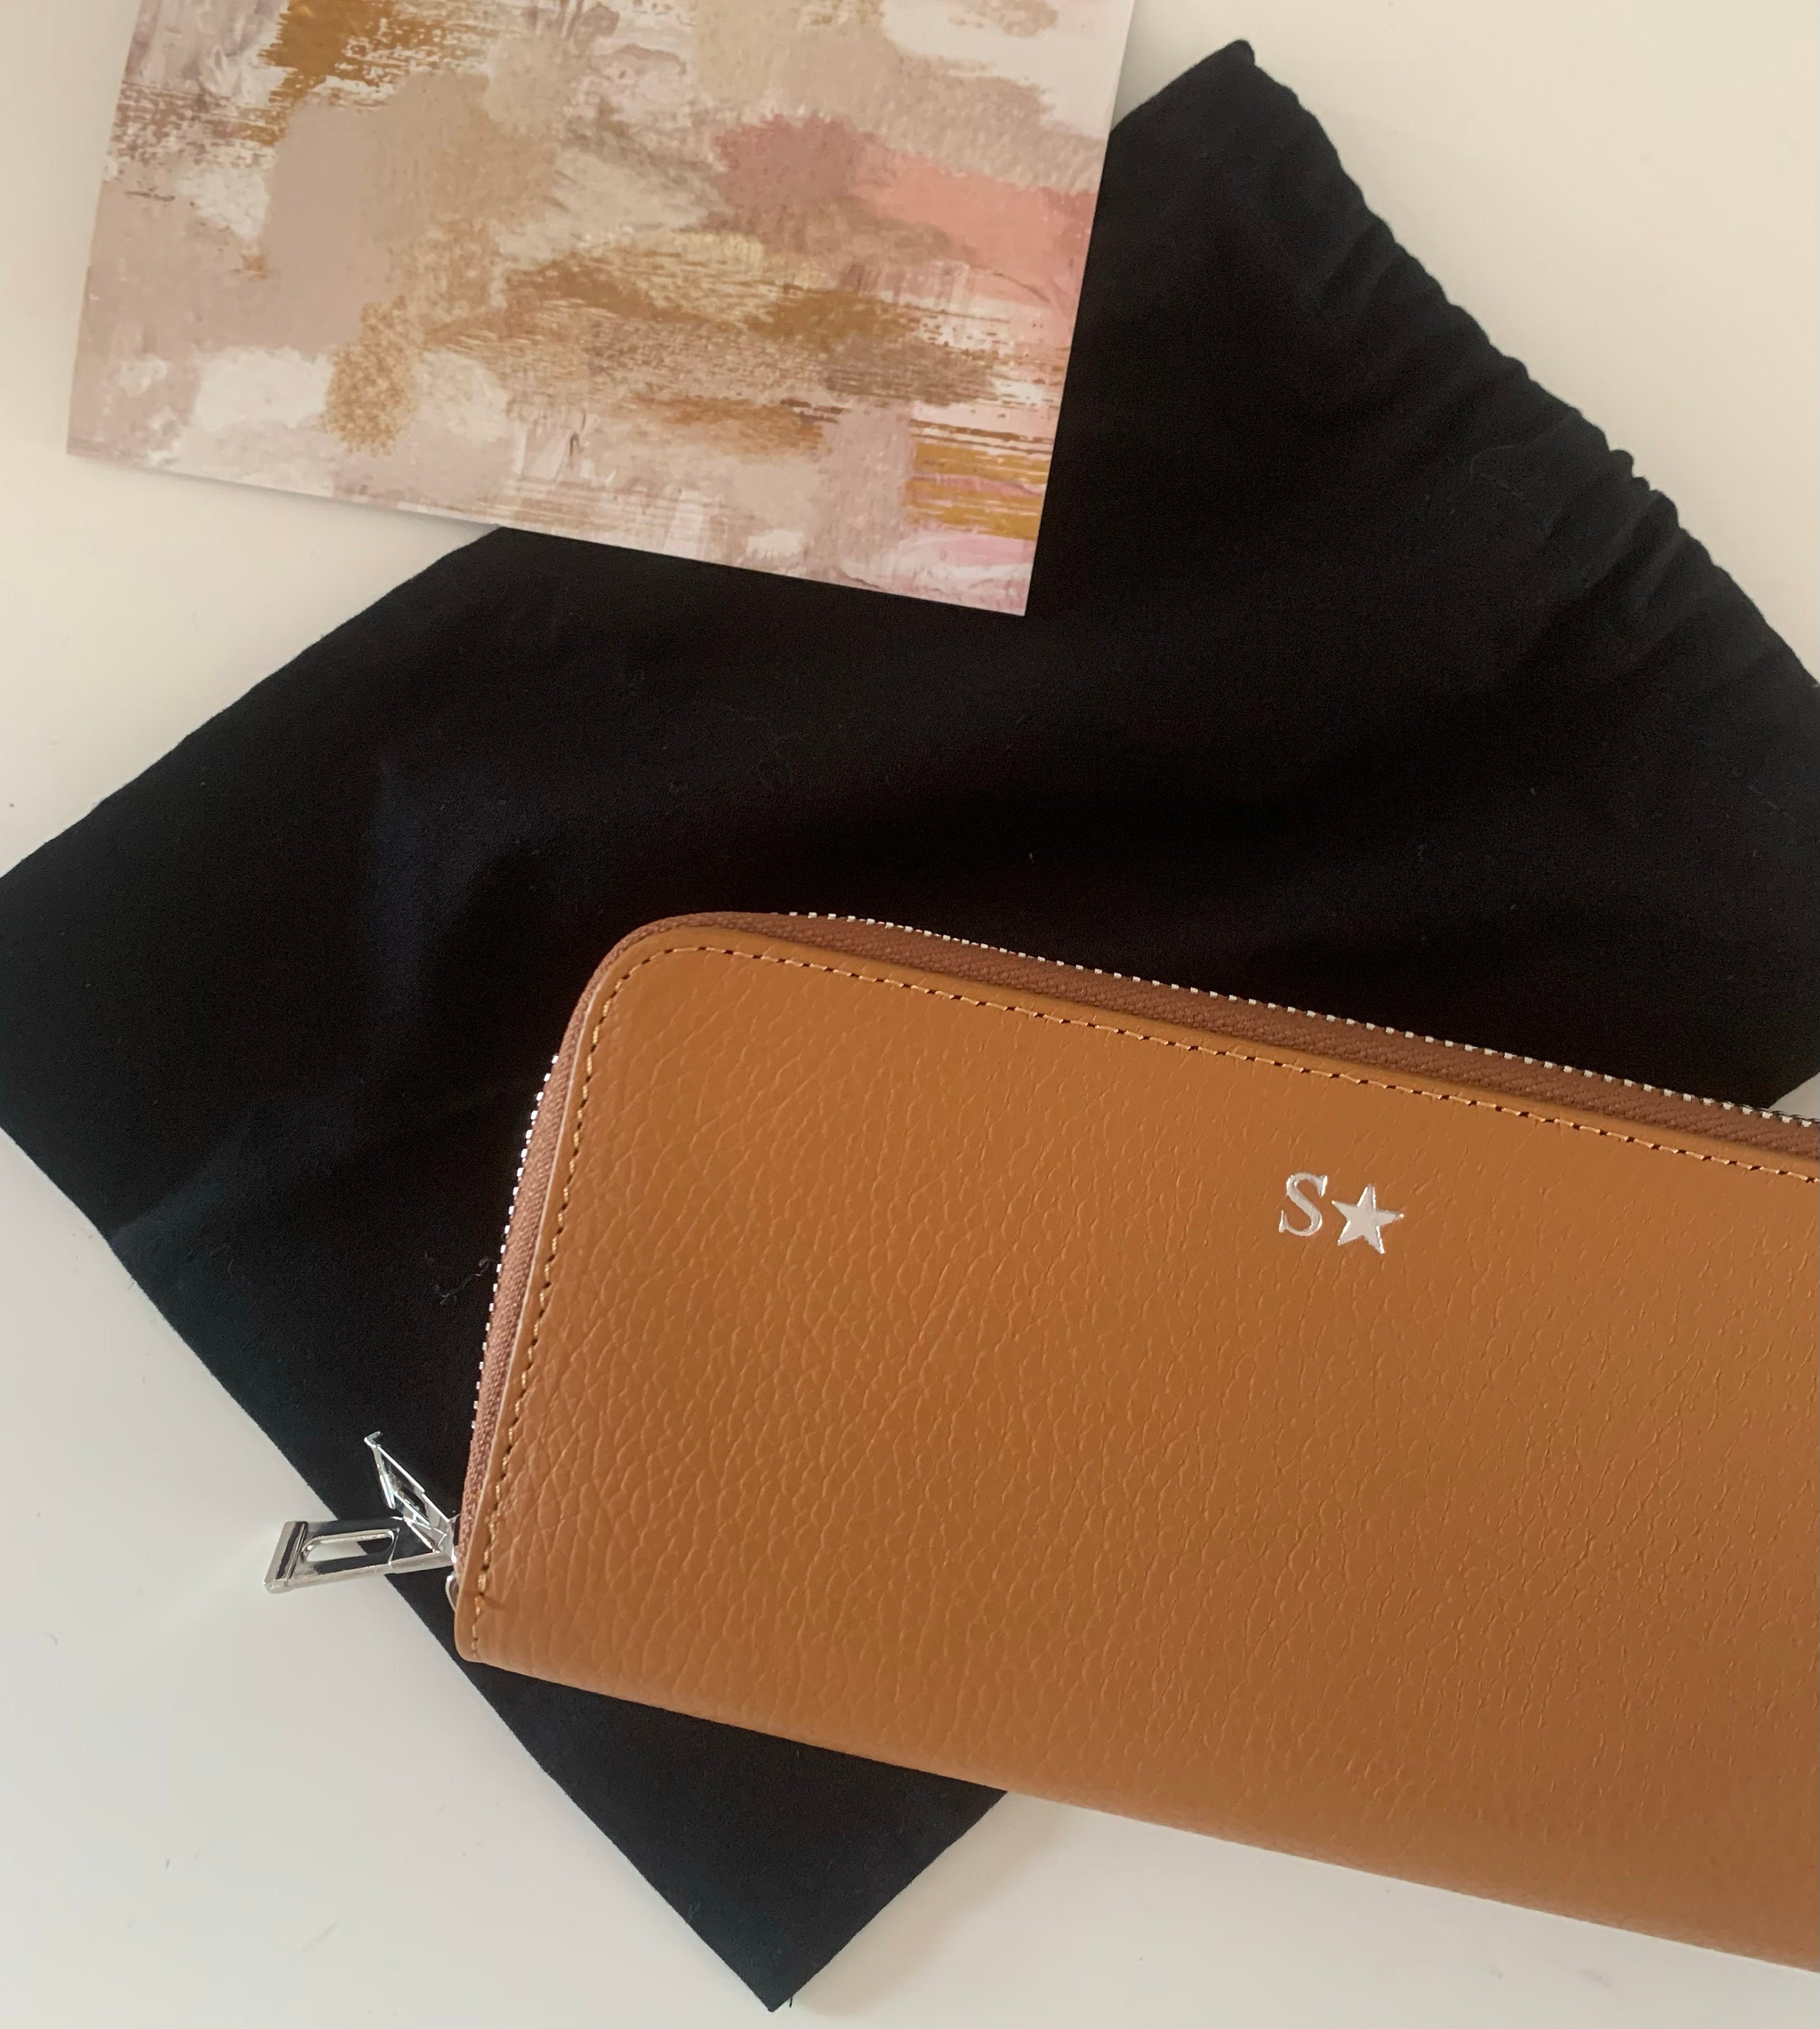 Louis Vuitton Zippy Compact Wallet, 6 Month Update / Review